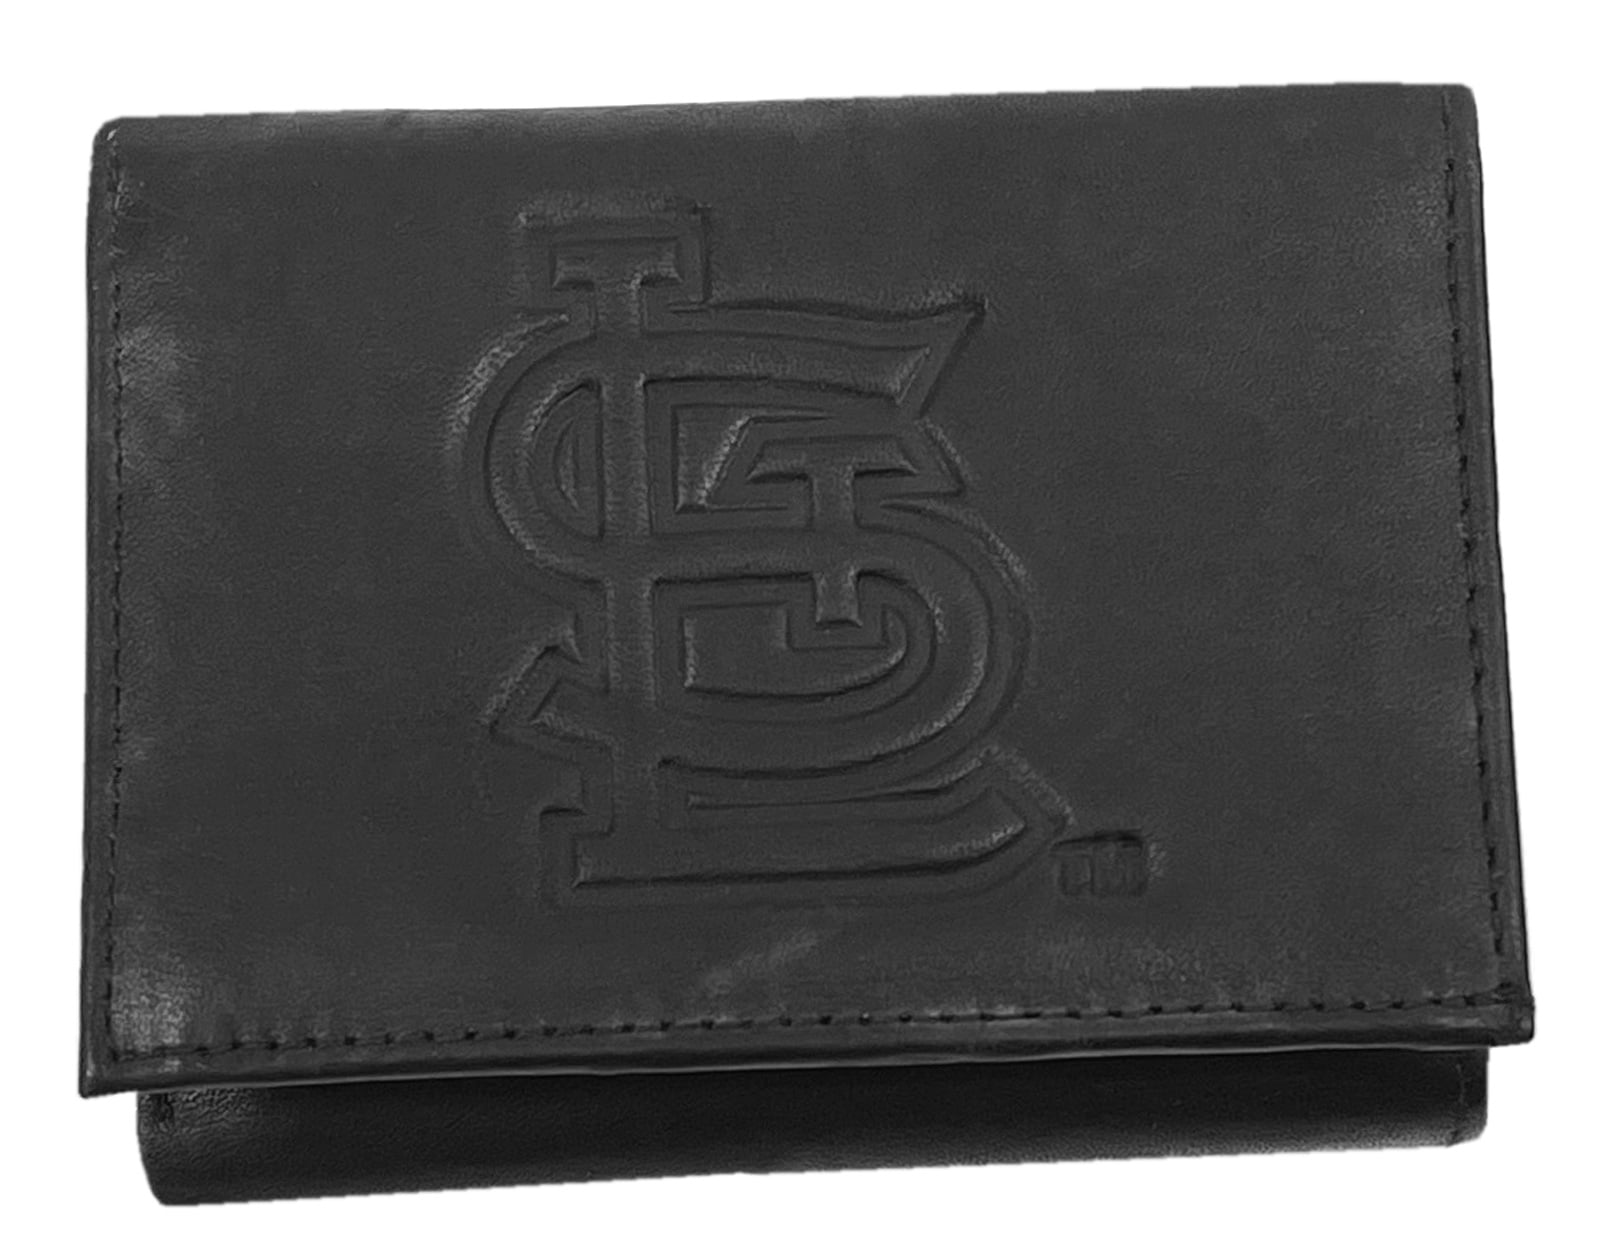 Officially Licensed MLB Zip Organizer Wallet - St. Louis Cardinals